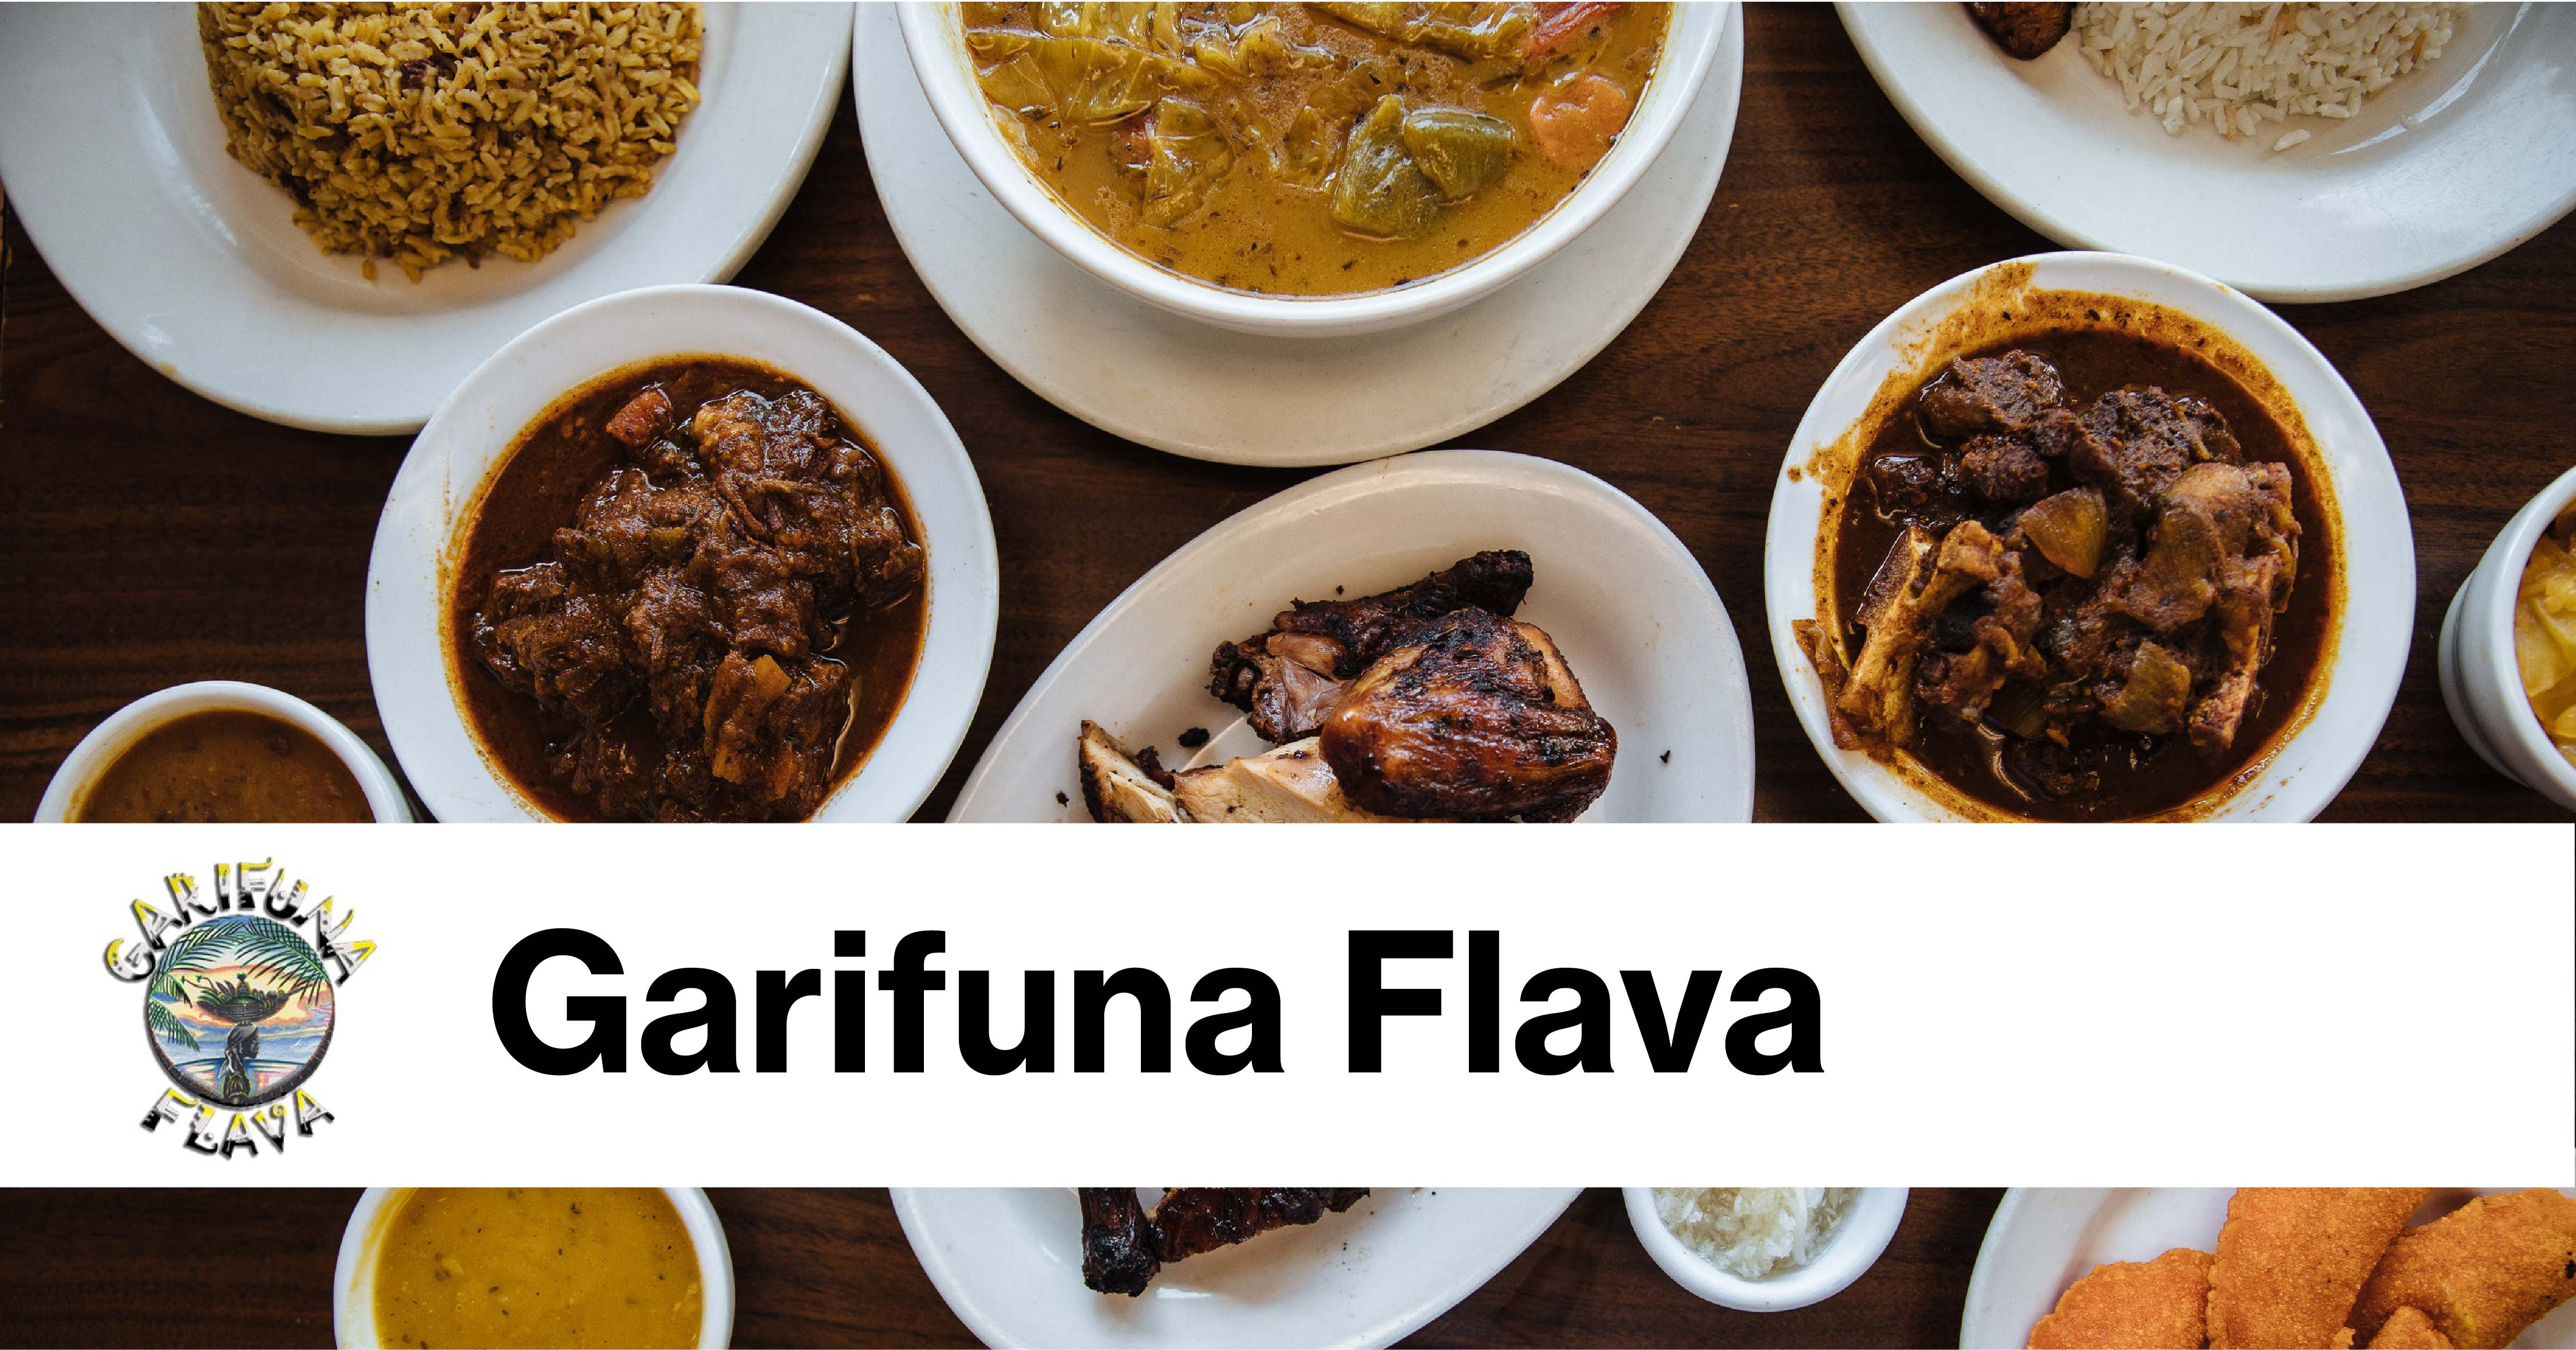 Many small dishes and "Garifuna Flava" and logo